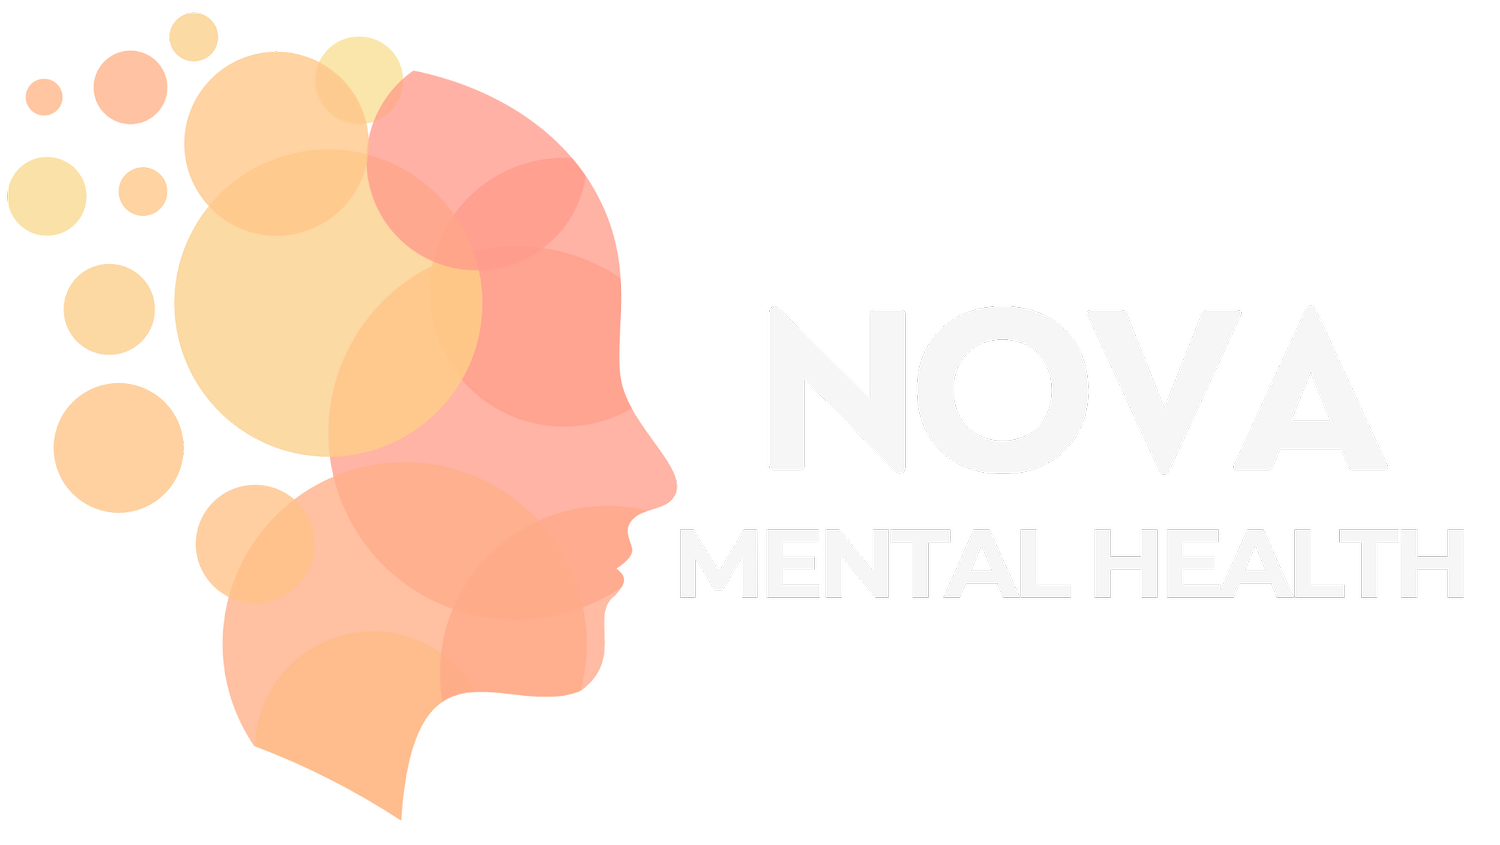 Nova Mental Health